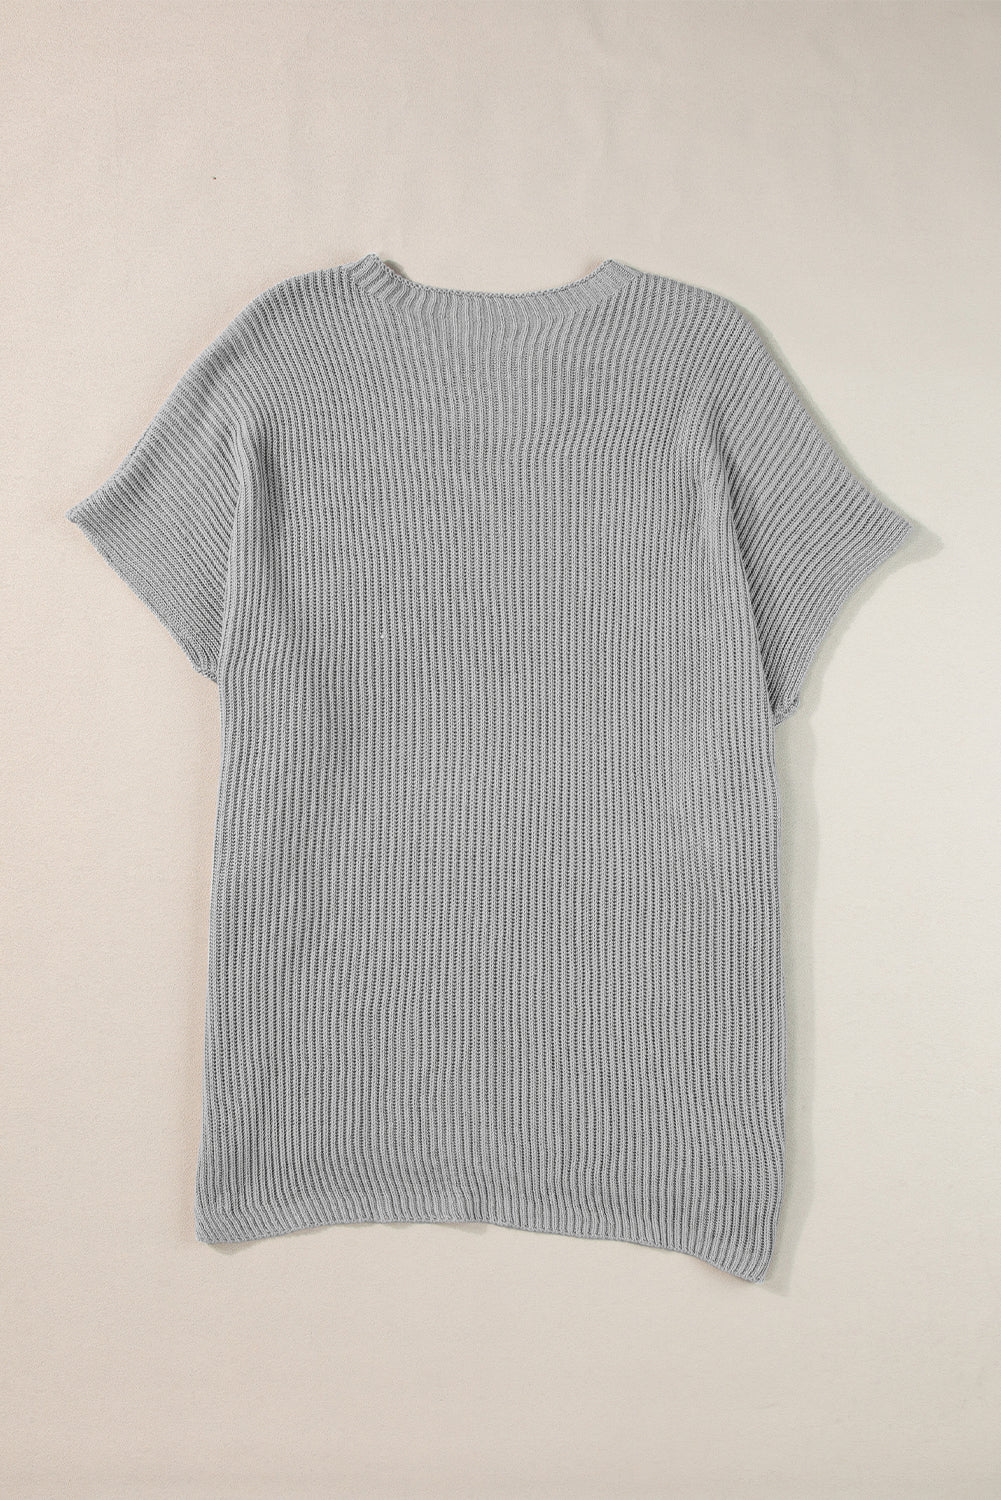 Gray Short Sleeve Side Slit Oversized Sweater Women's Knit Top